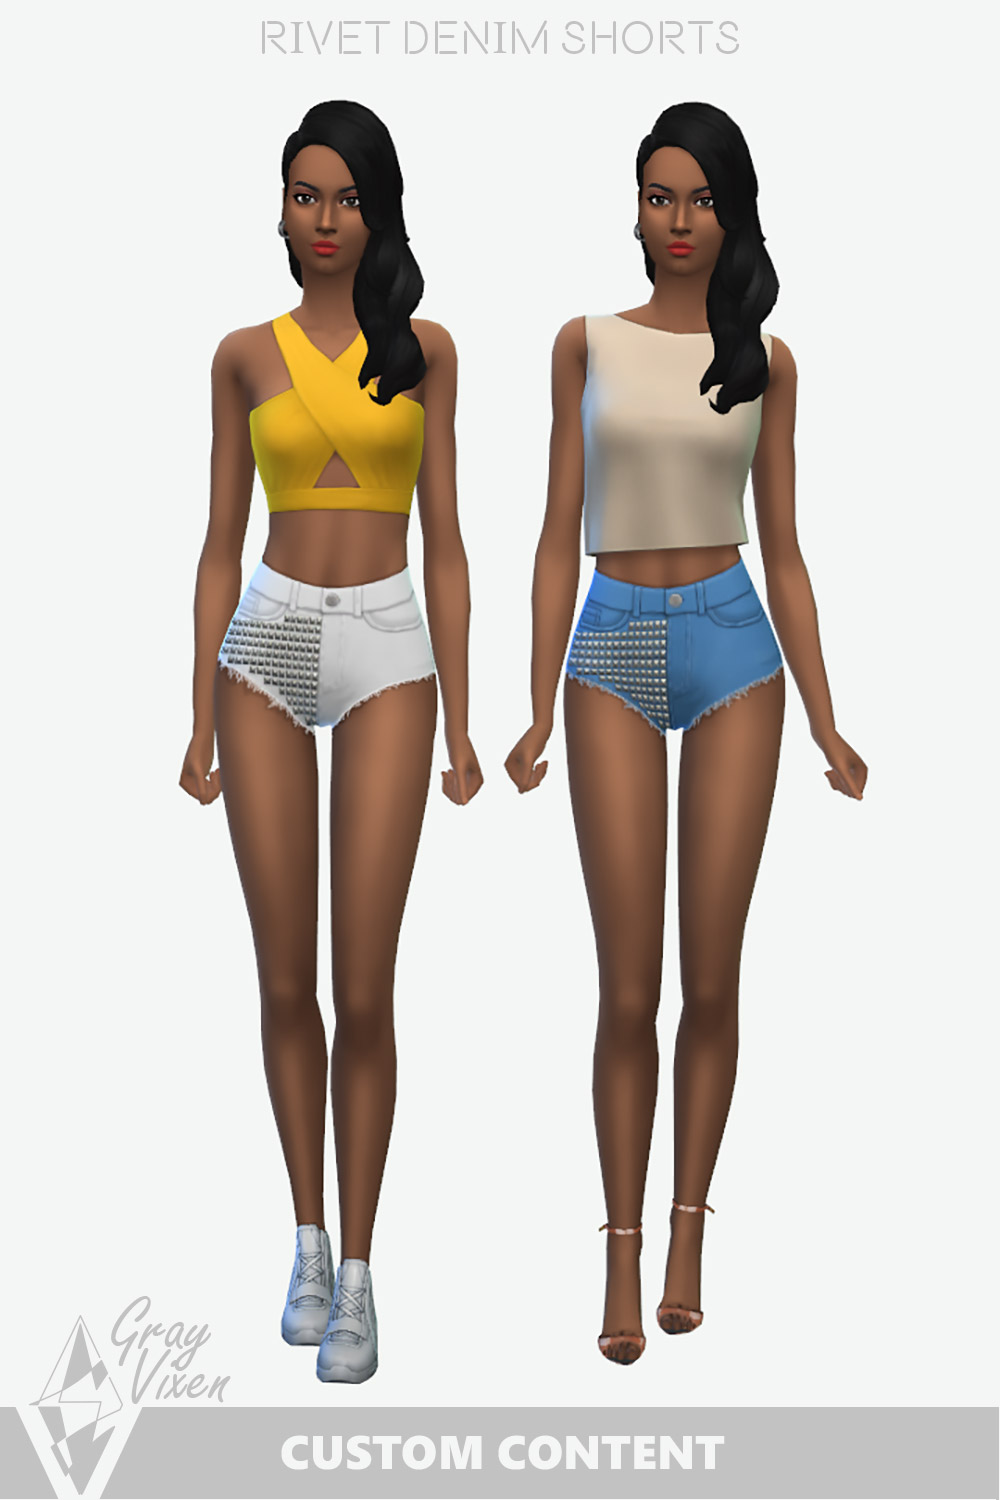 The Sims 4 CC Shorts